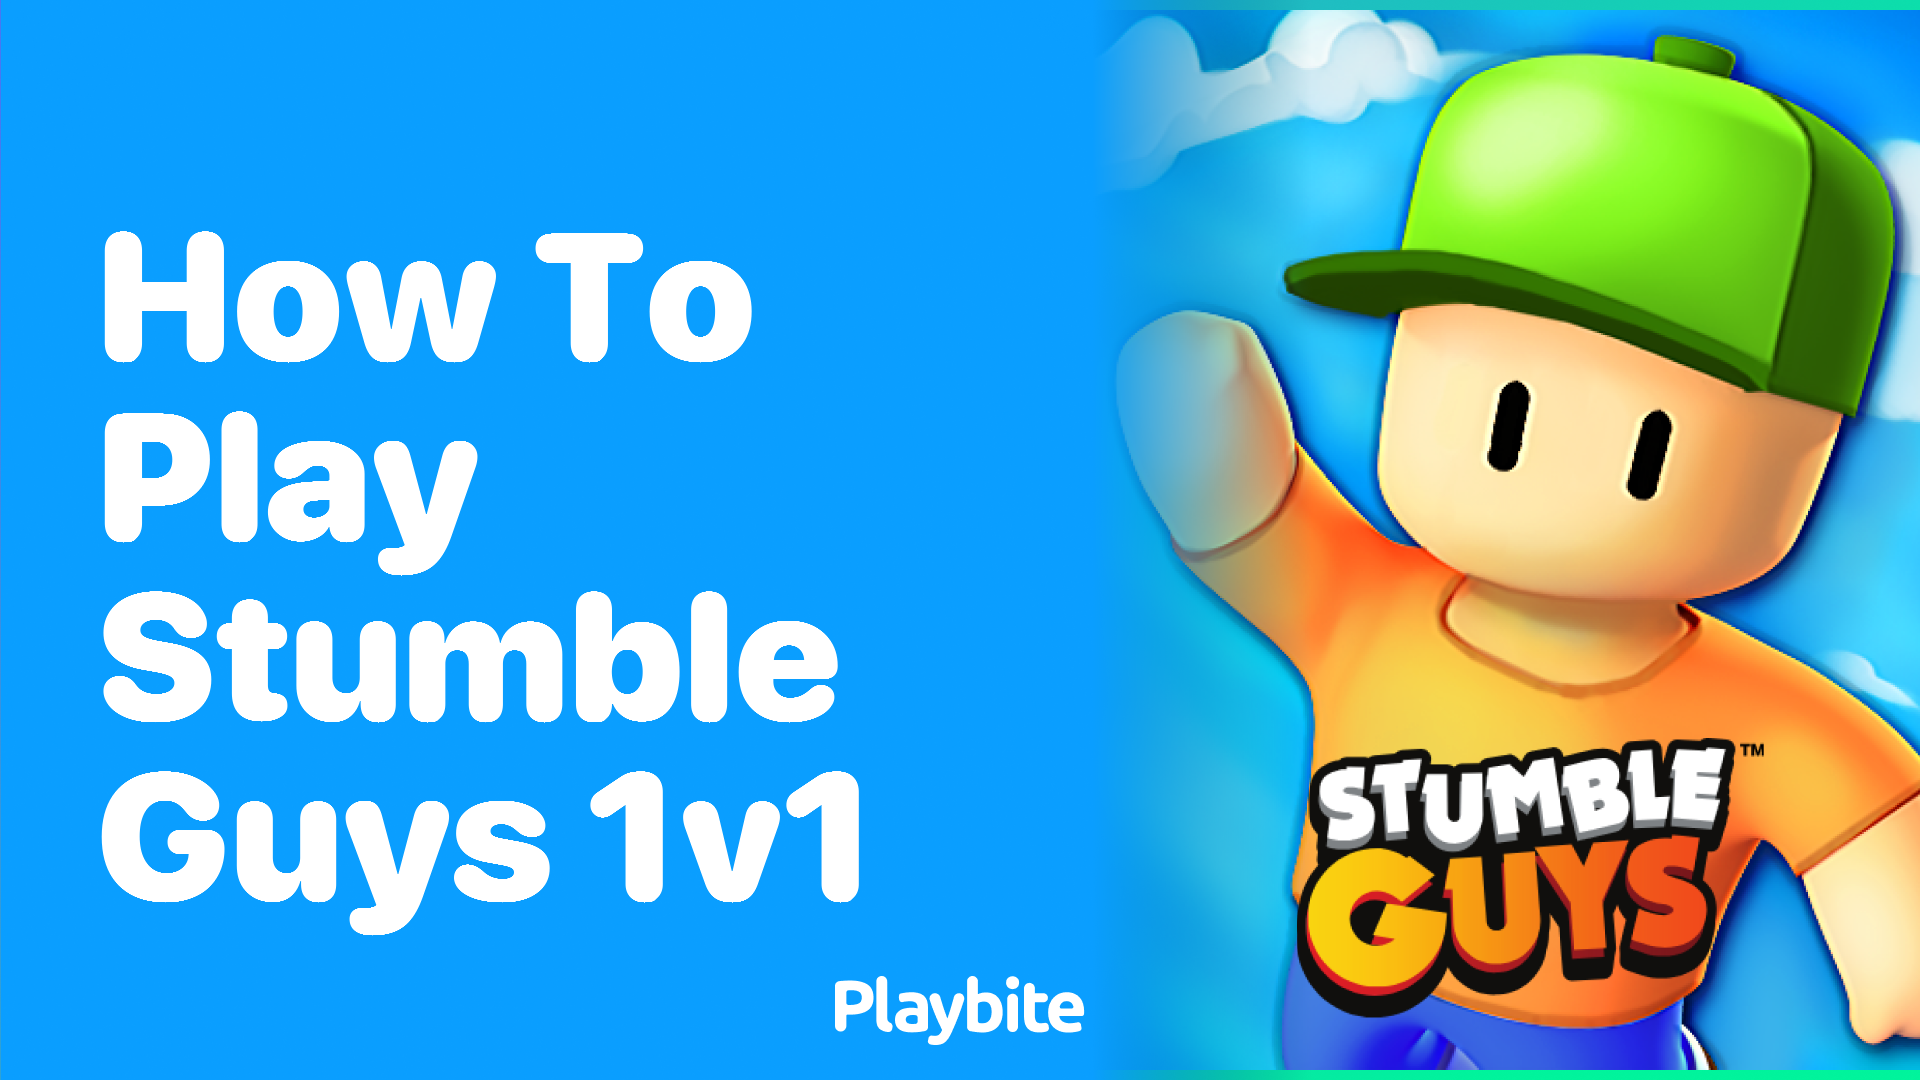 How to Play Stumble Guys 1v1: A Fun Guide!